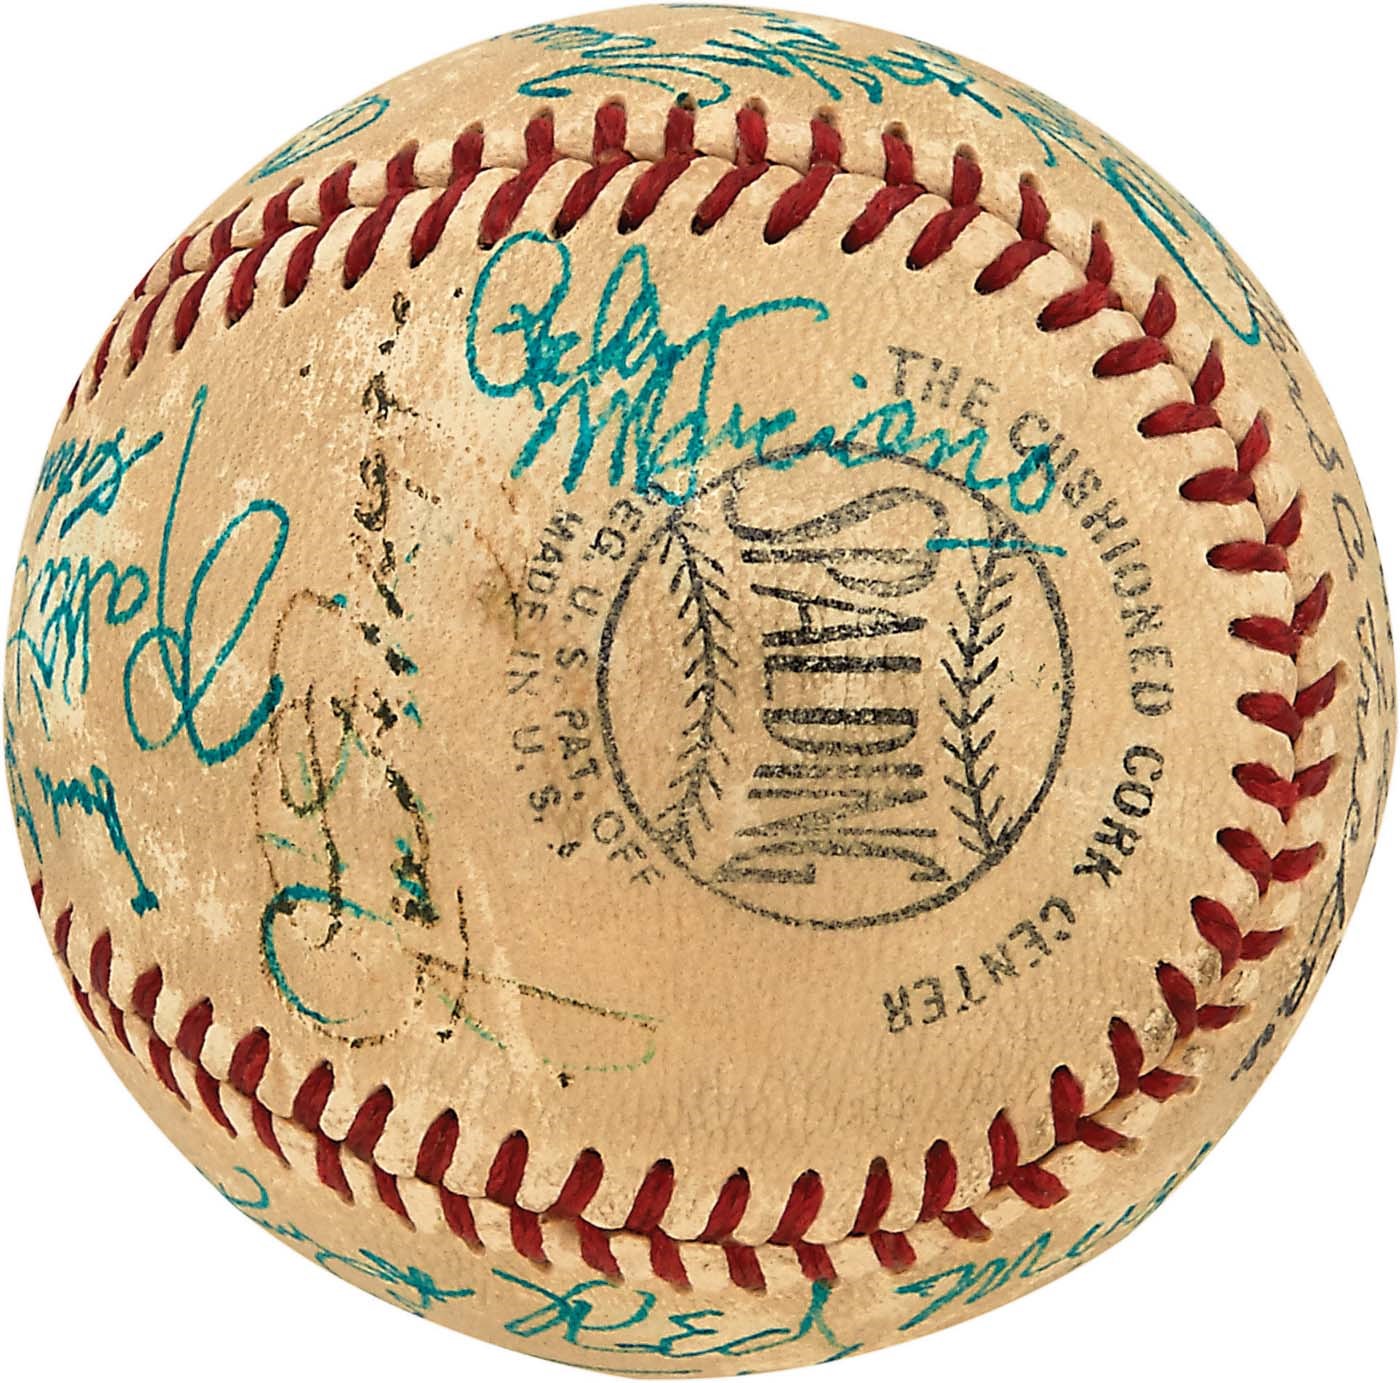 - 1940s-50s Rocky Marciano & Sports Legends Signed Baseball (JSA)